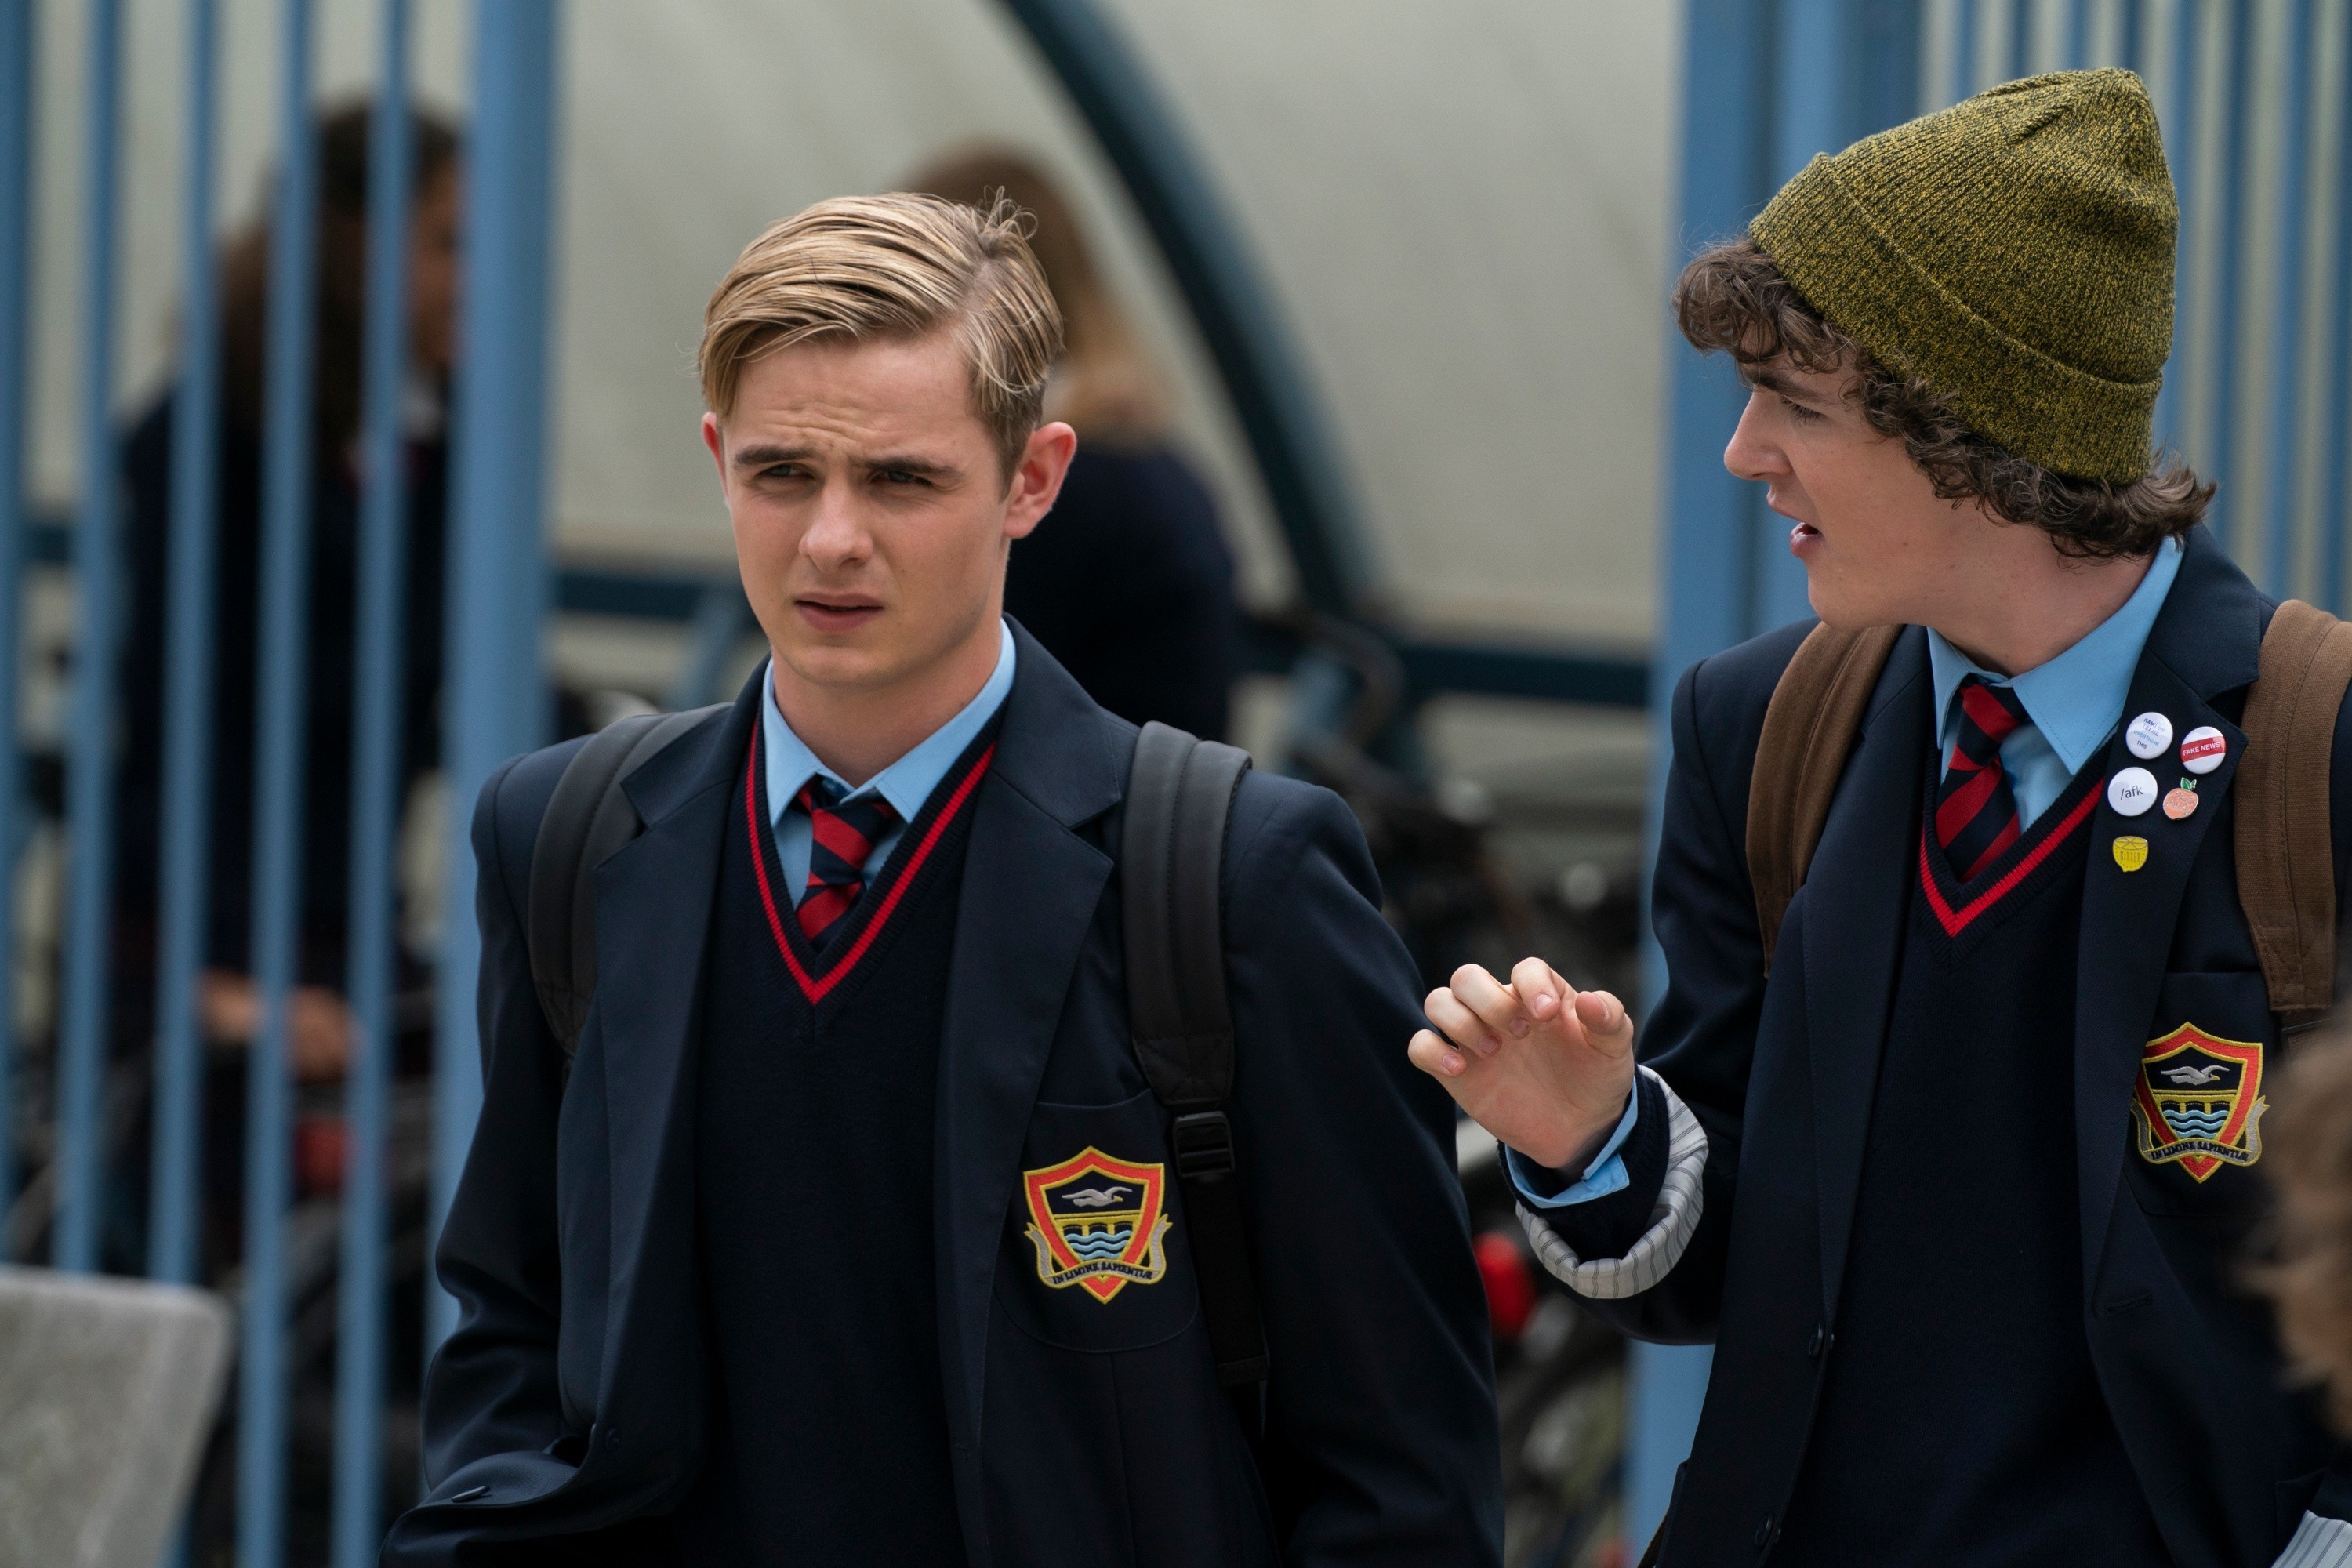 Alex and Tom in school uniforms